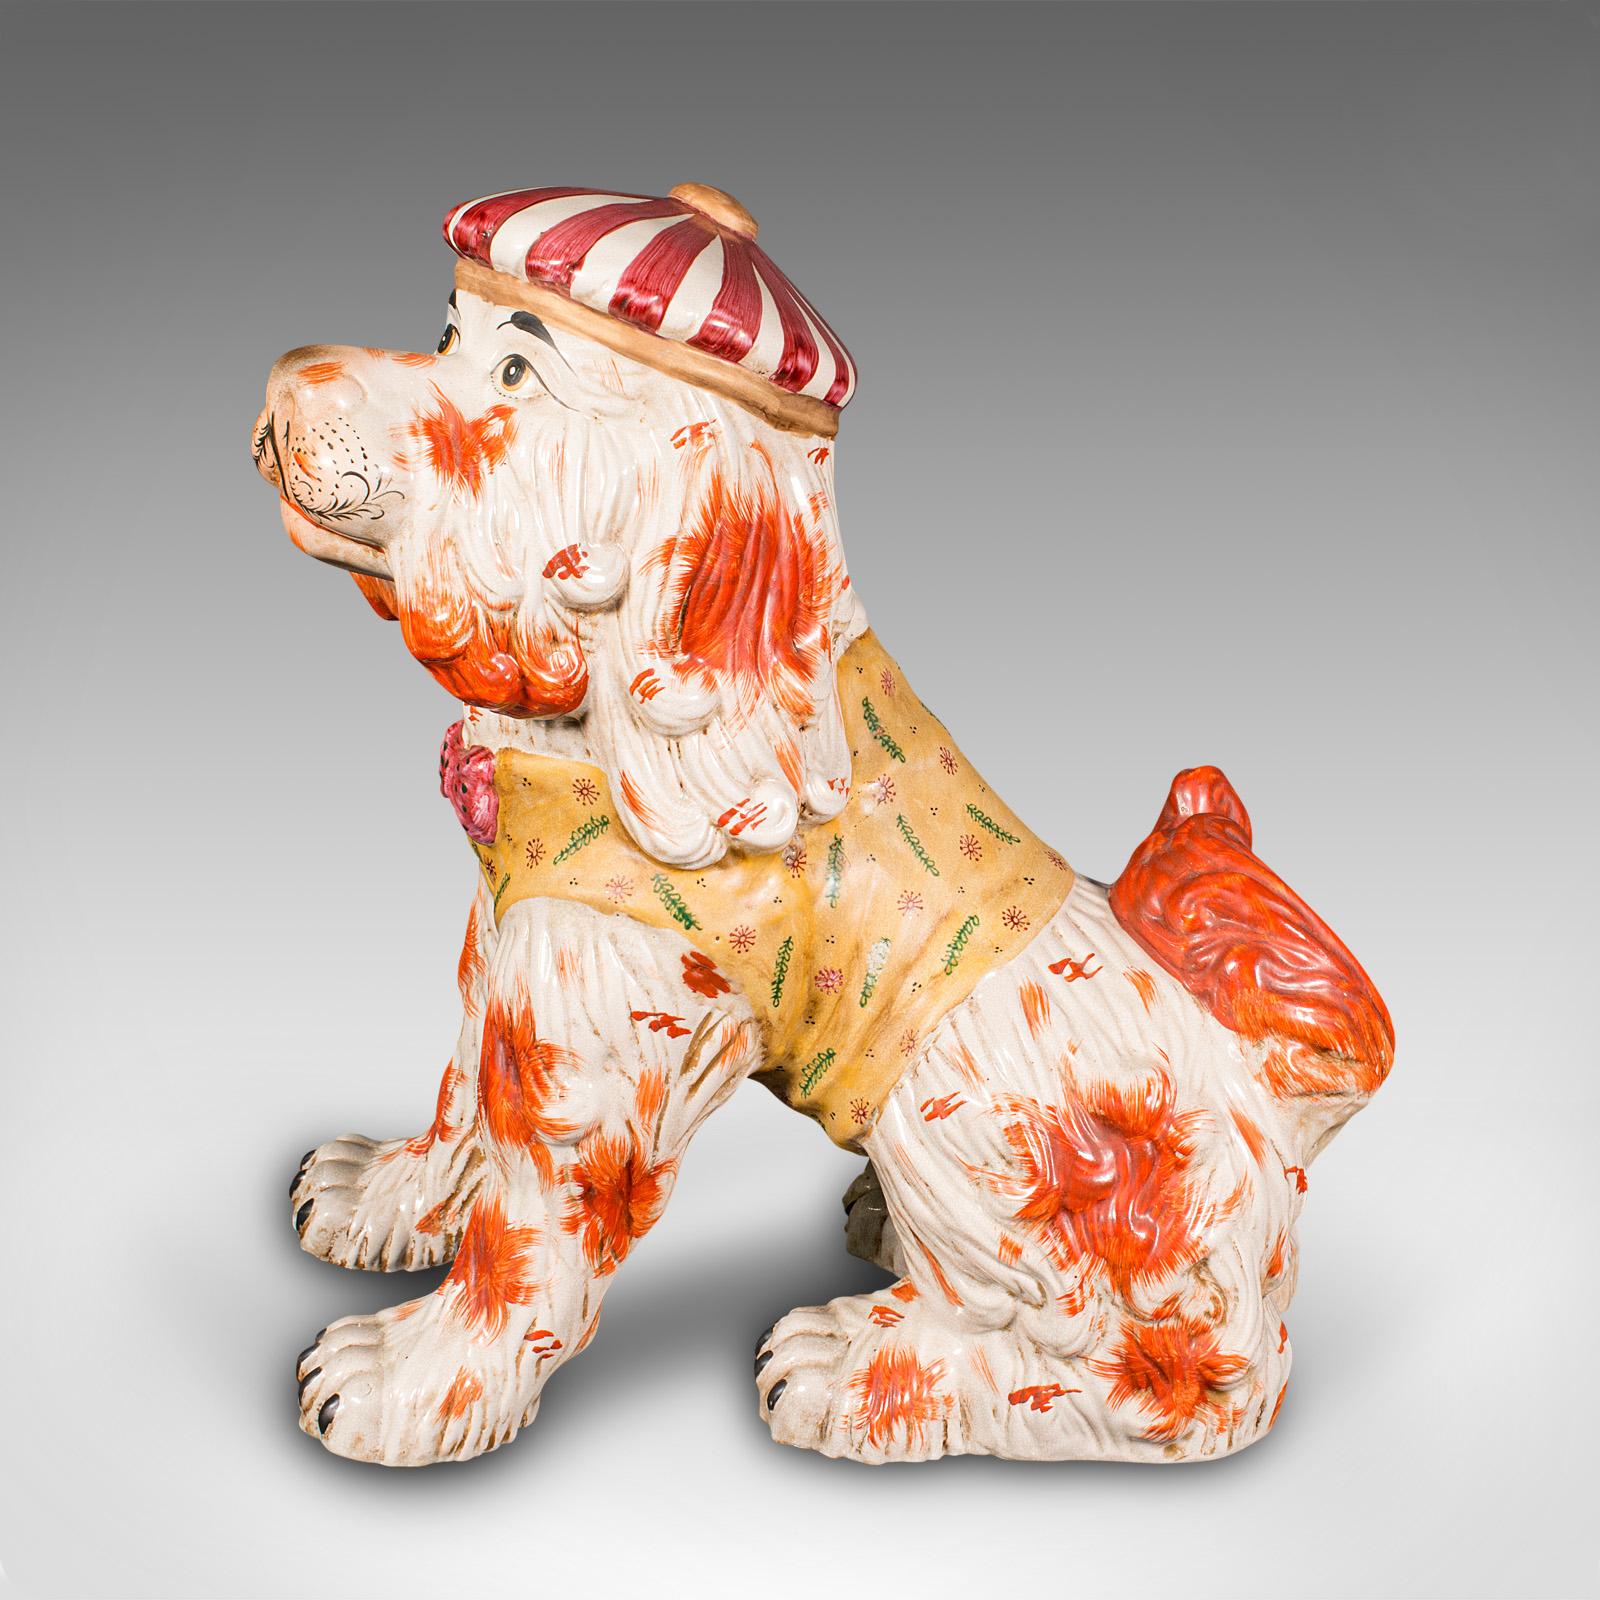 British Very Large Antique Decorative Dog, English, Ceramic, Life Size Figure, Victorian